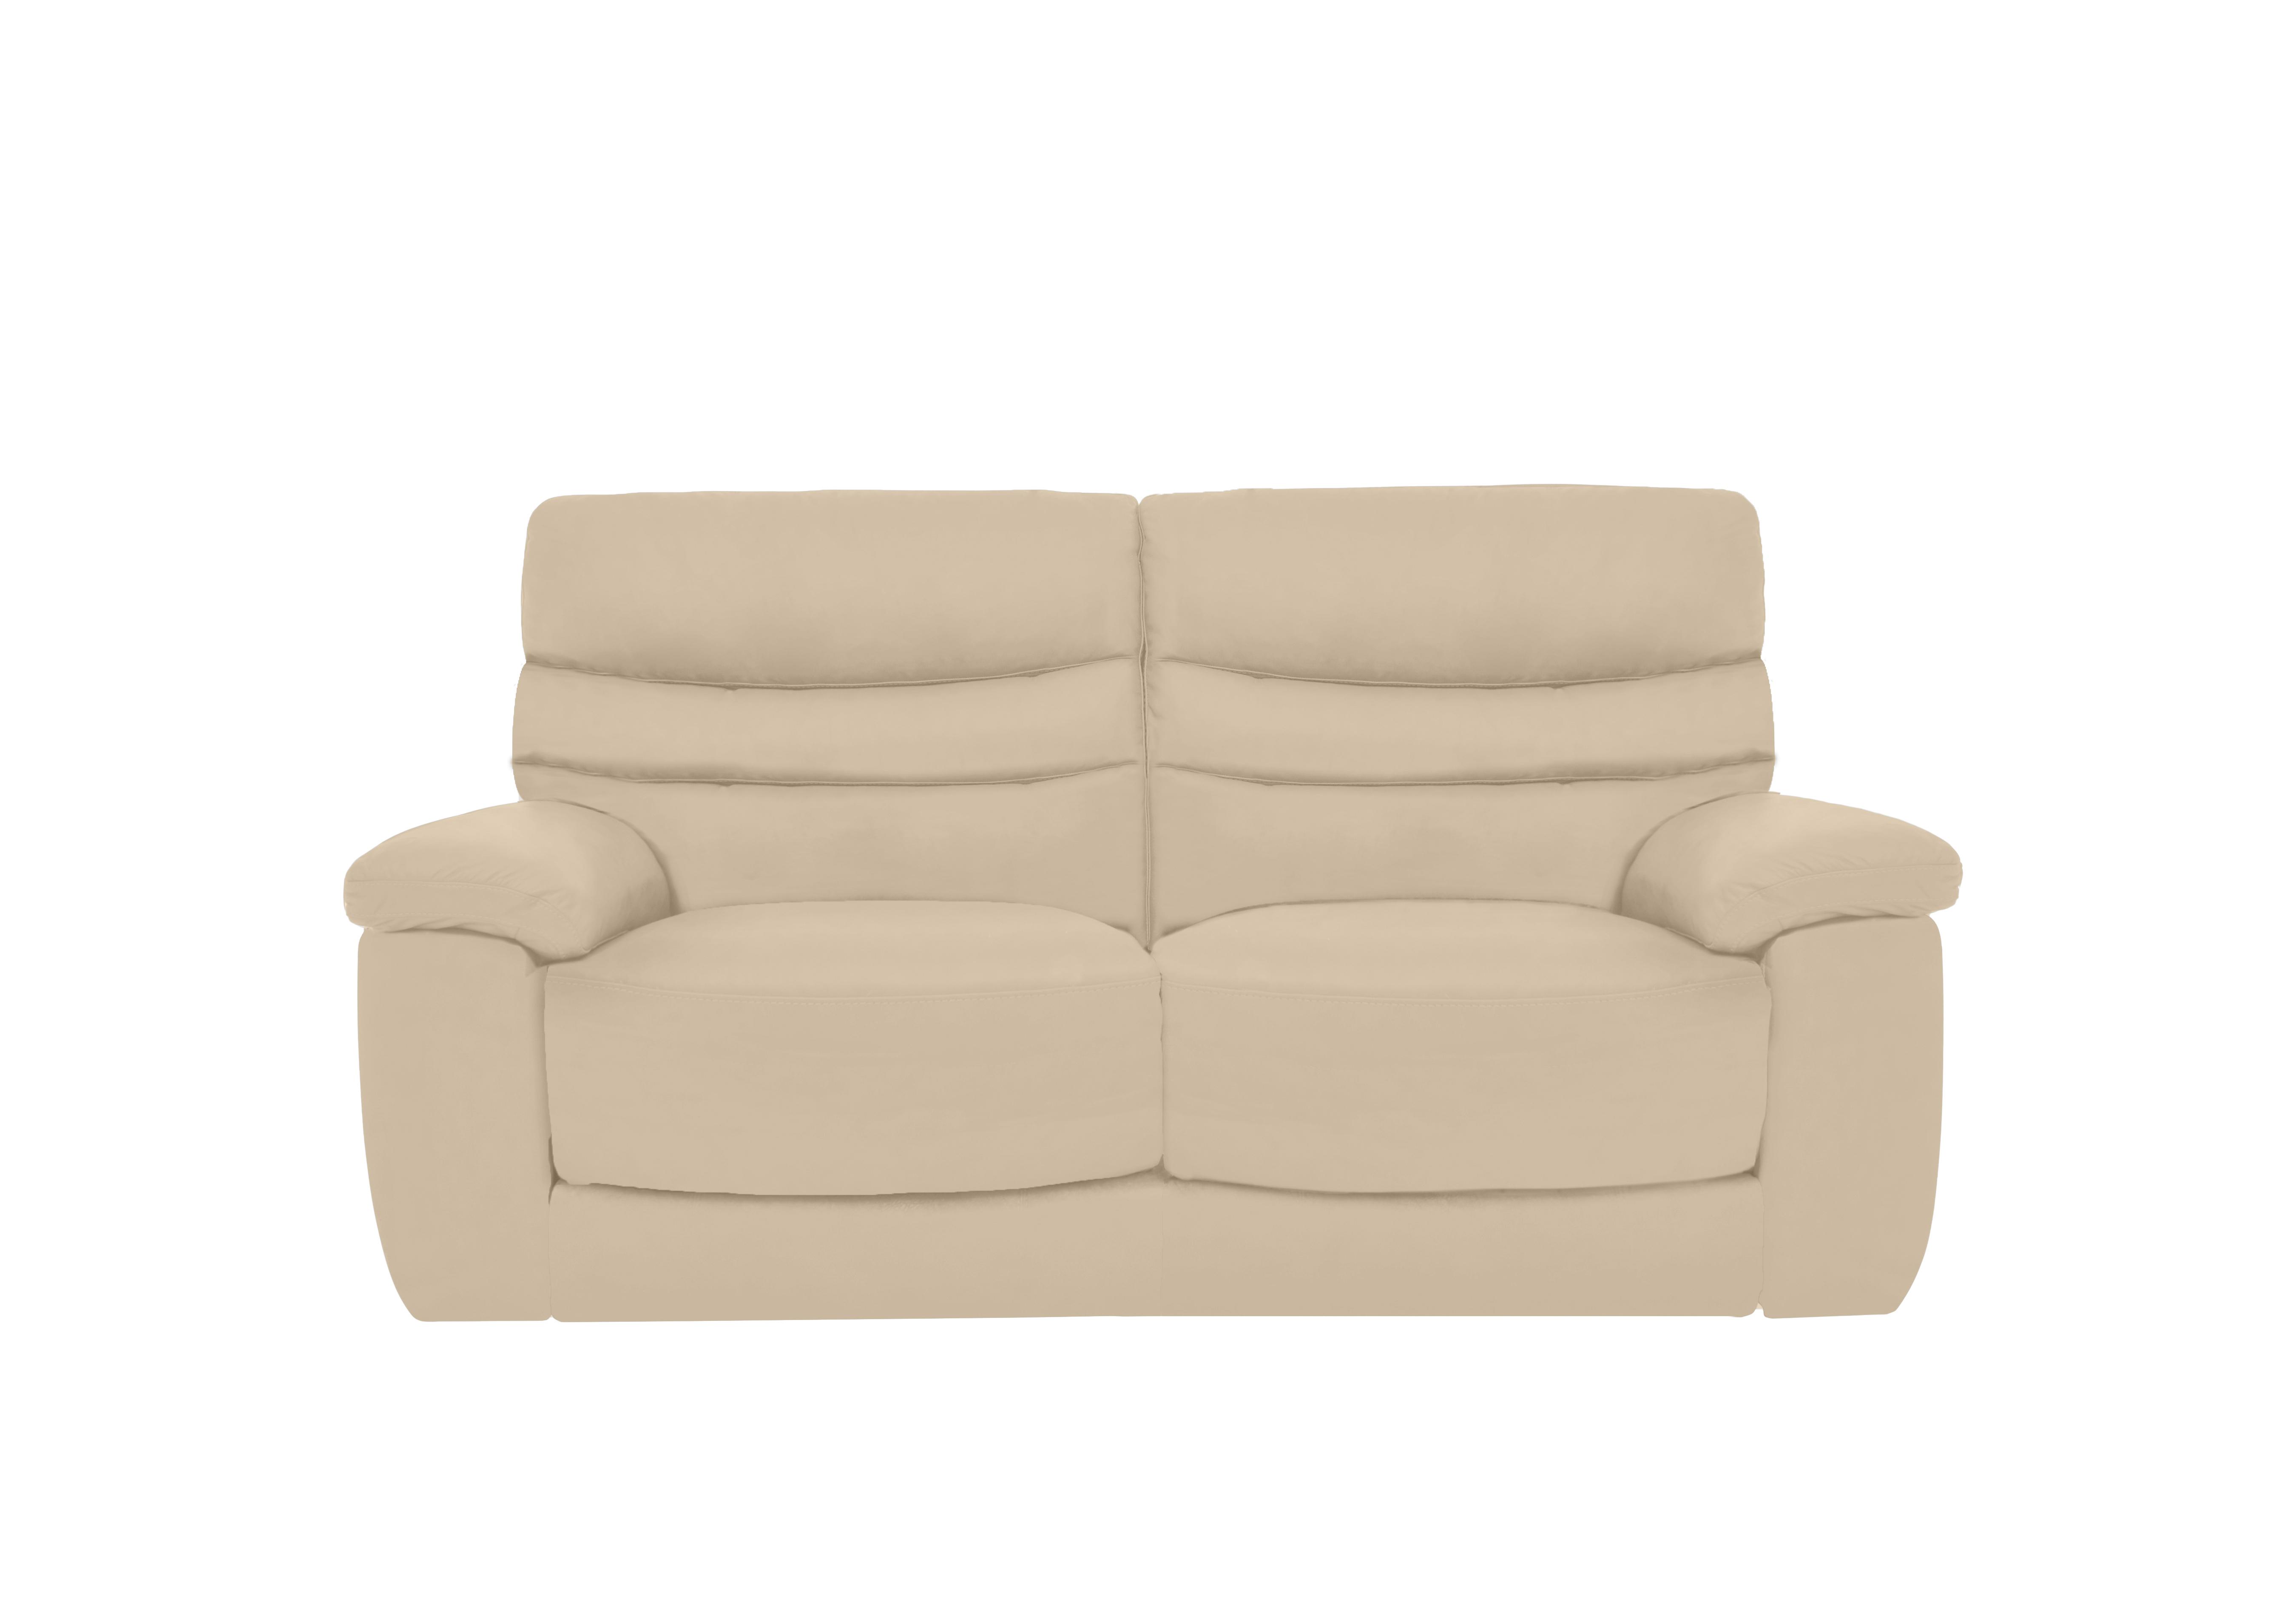 Nimbus 2 Seater Leather Sofa in Bx-862c Bisque on Furniture Village